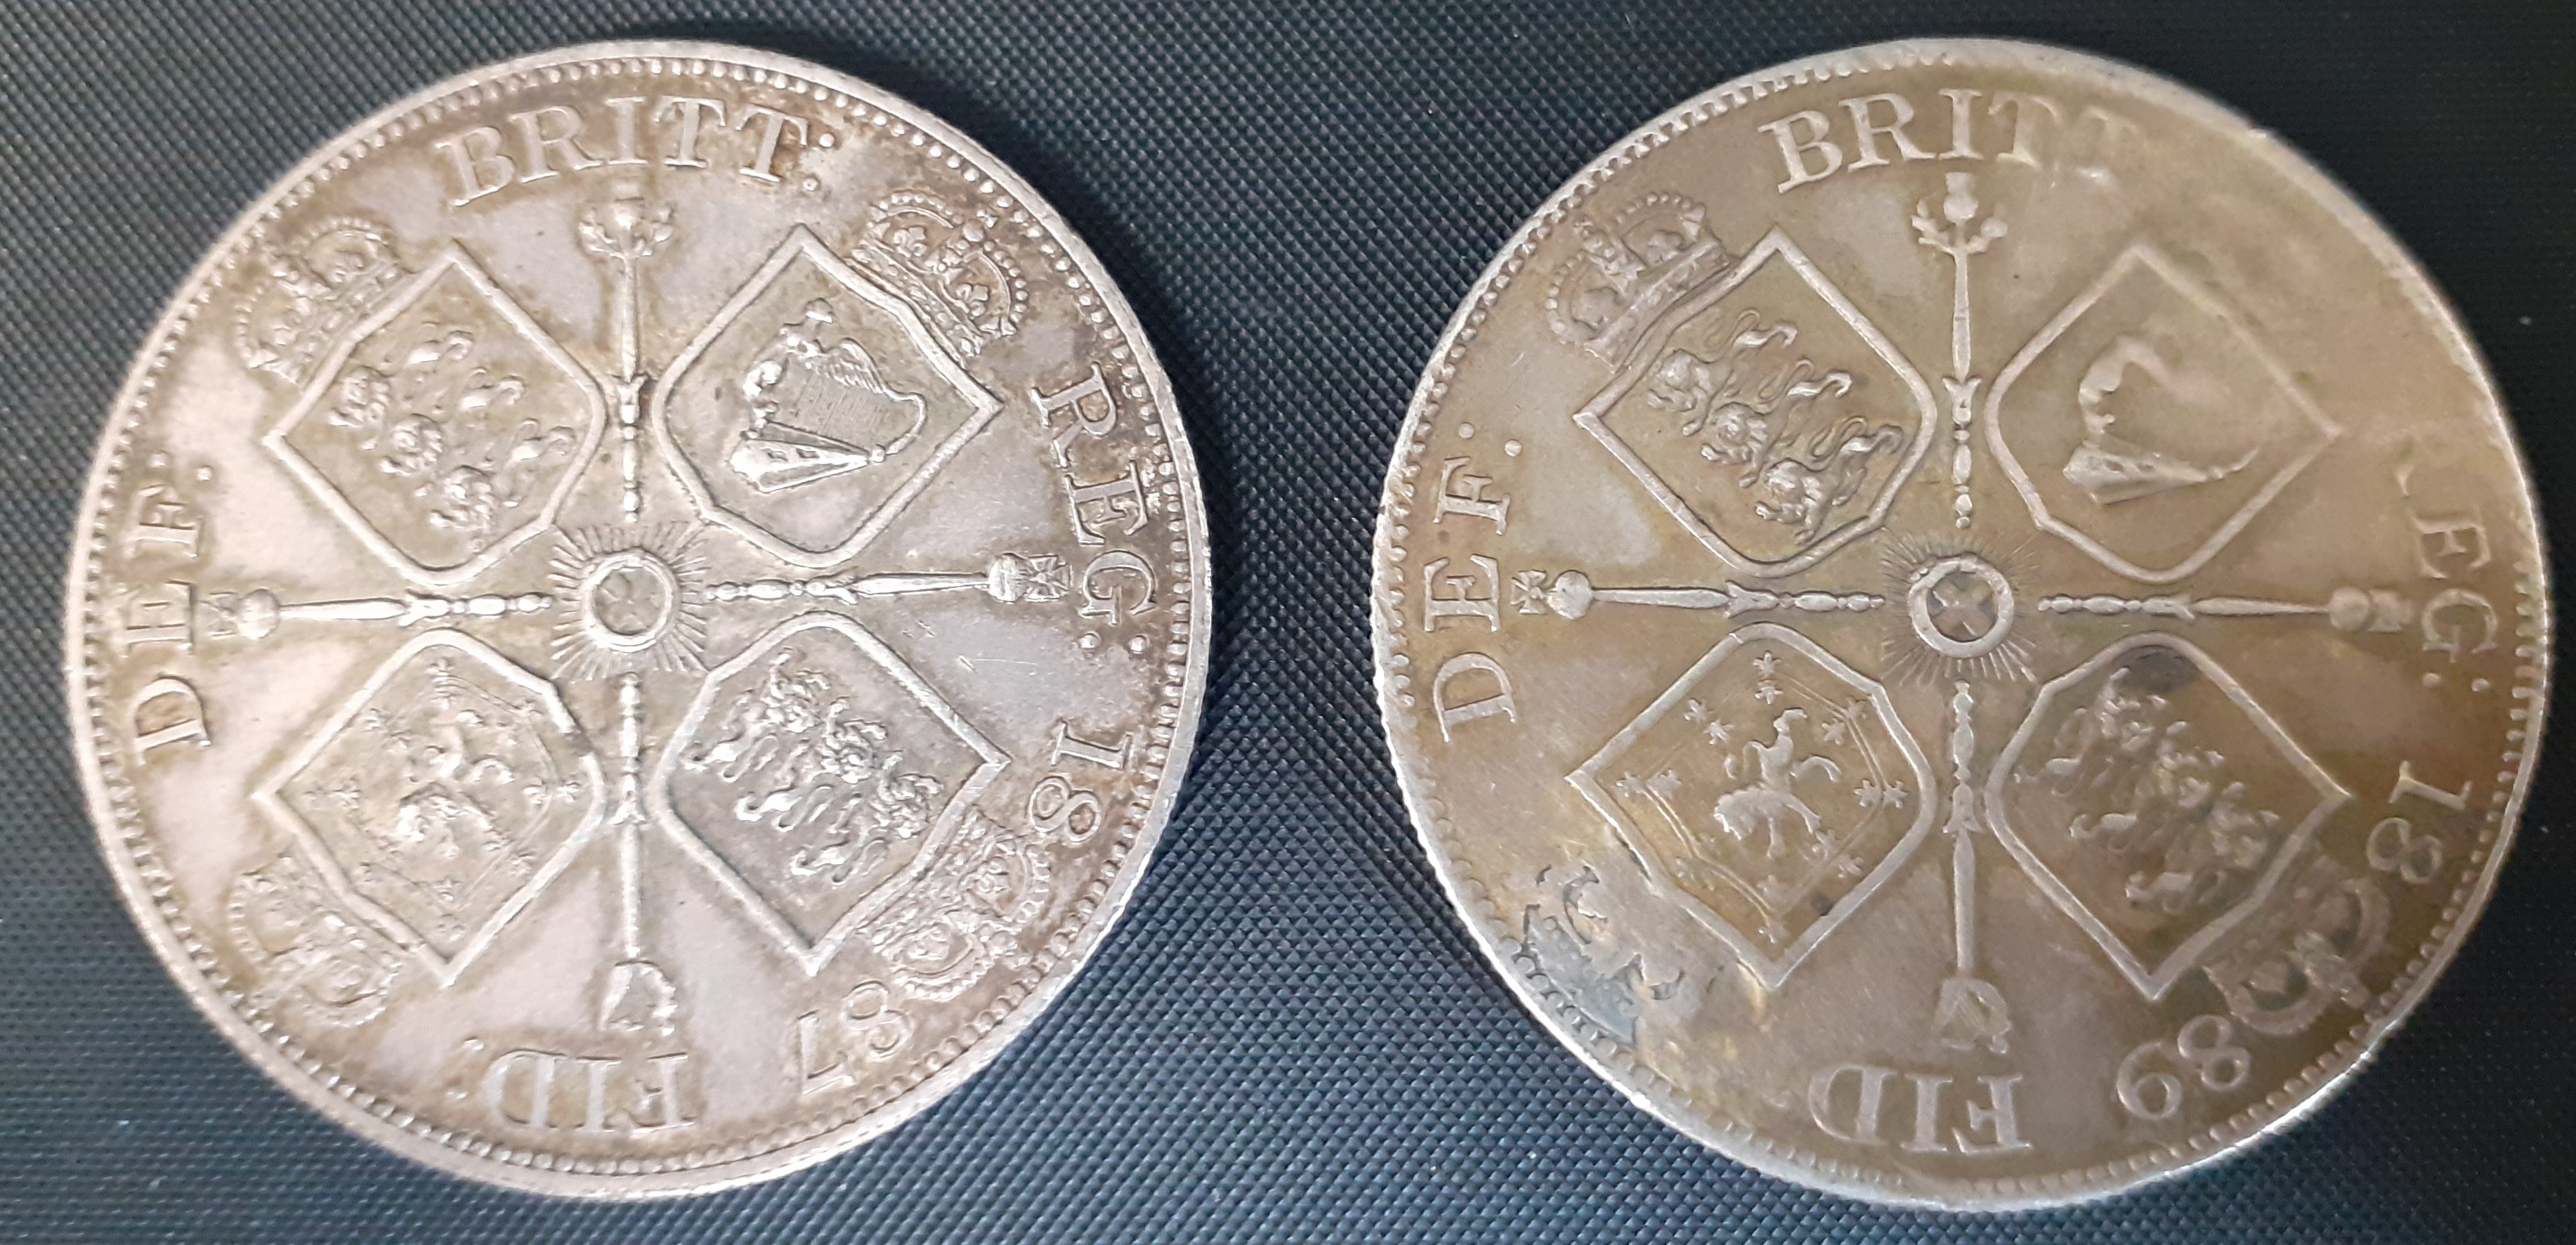 2 x 4 shilling pieces 1887 & 1889